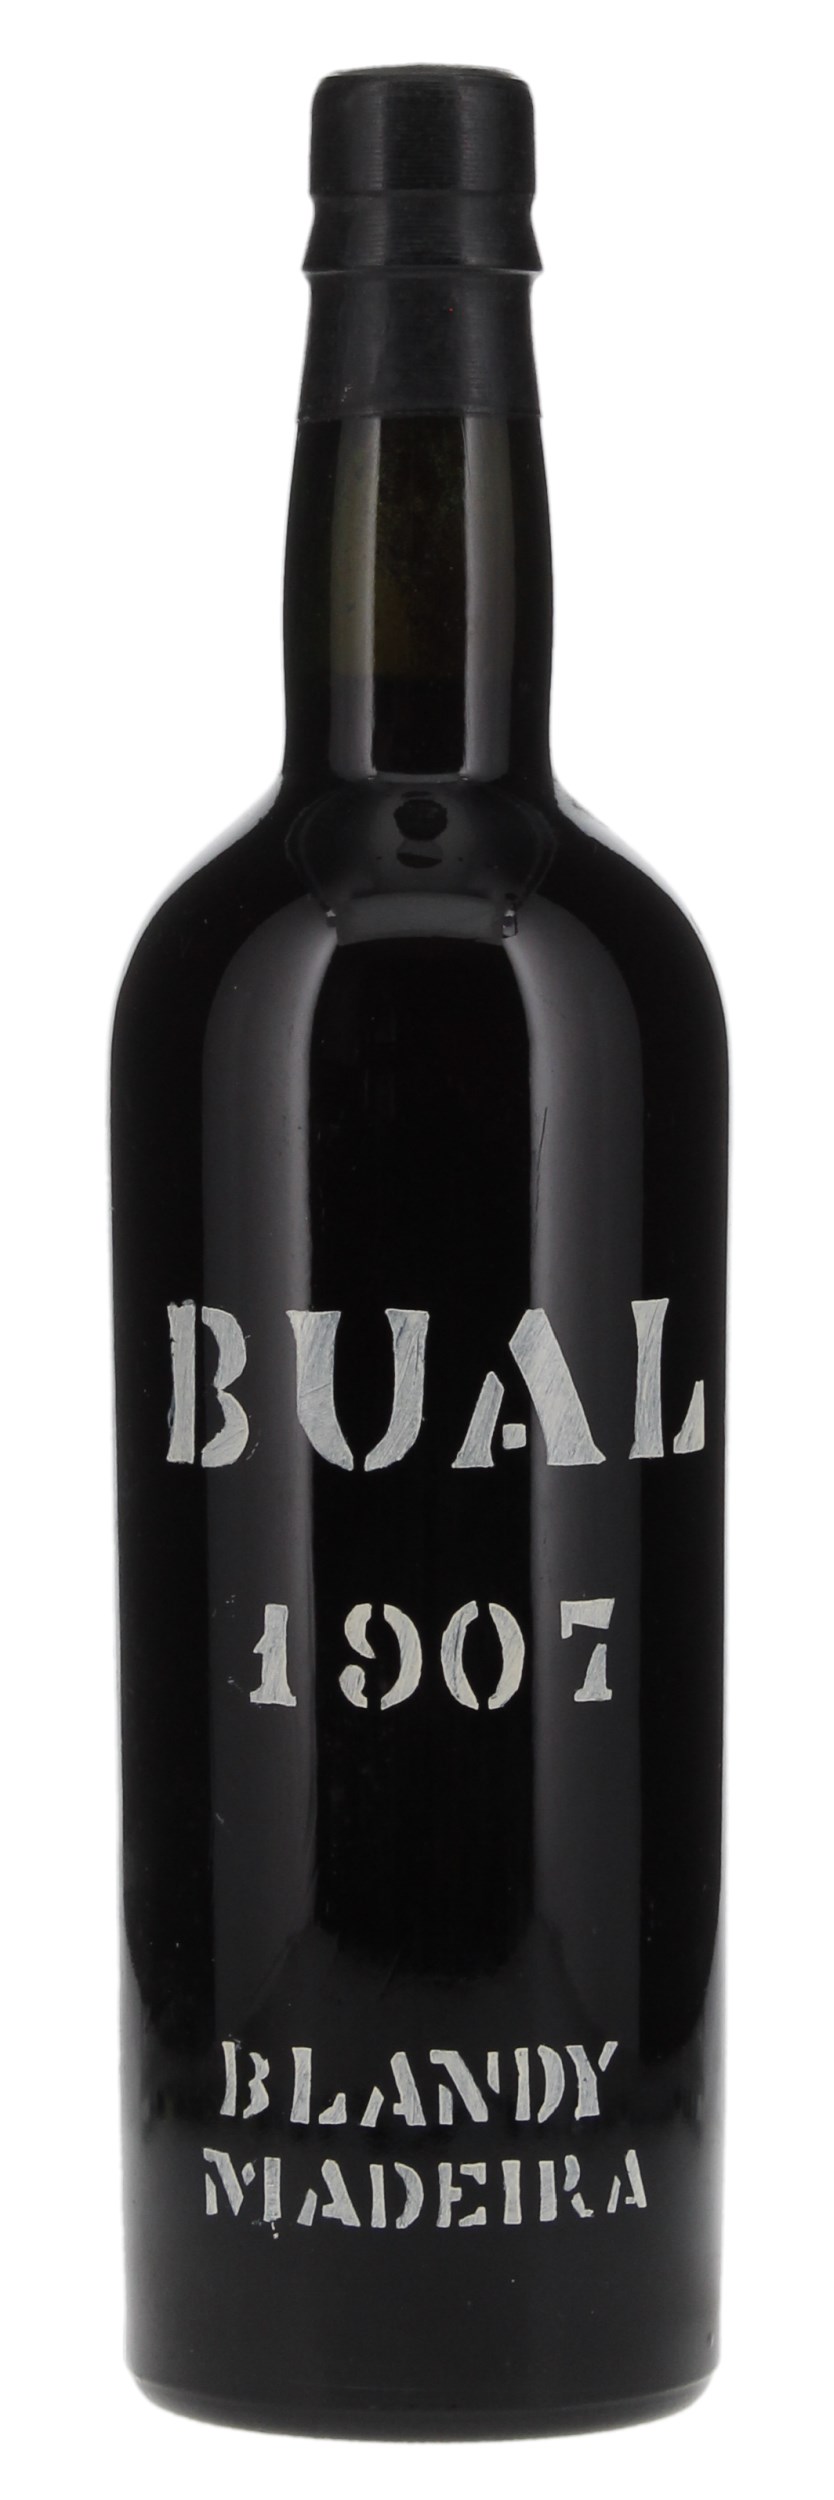 1907 Blandy's Boal Madeira, 750ml